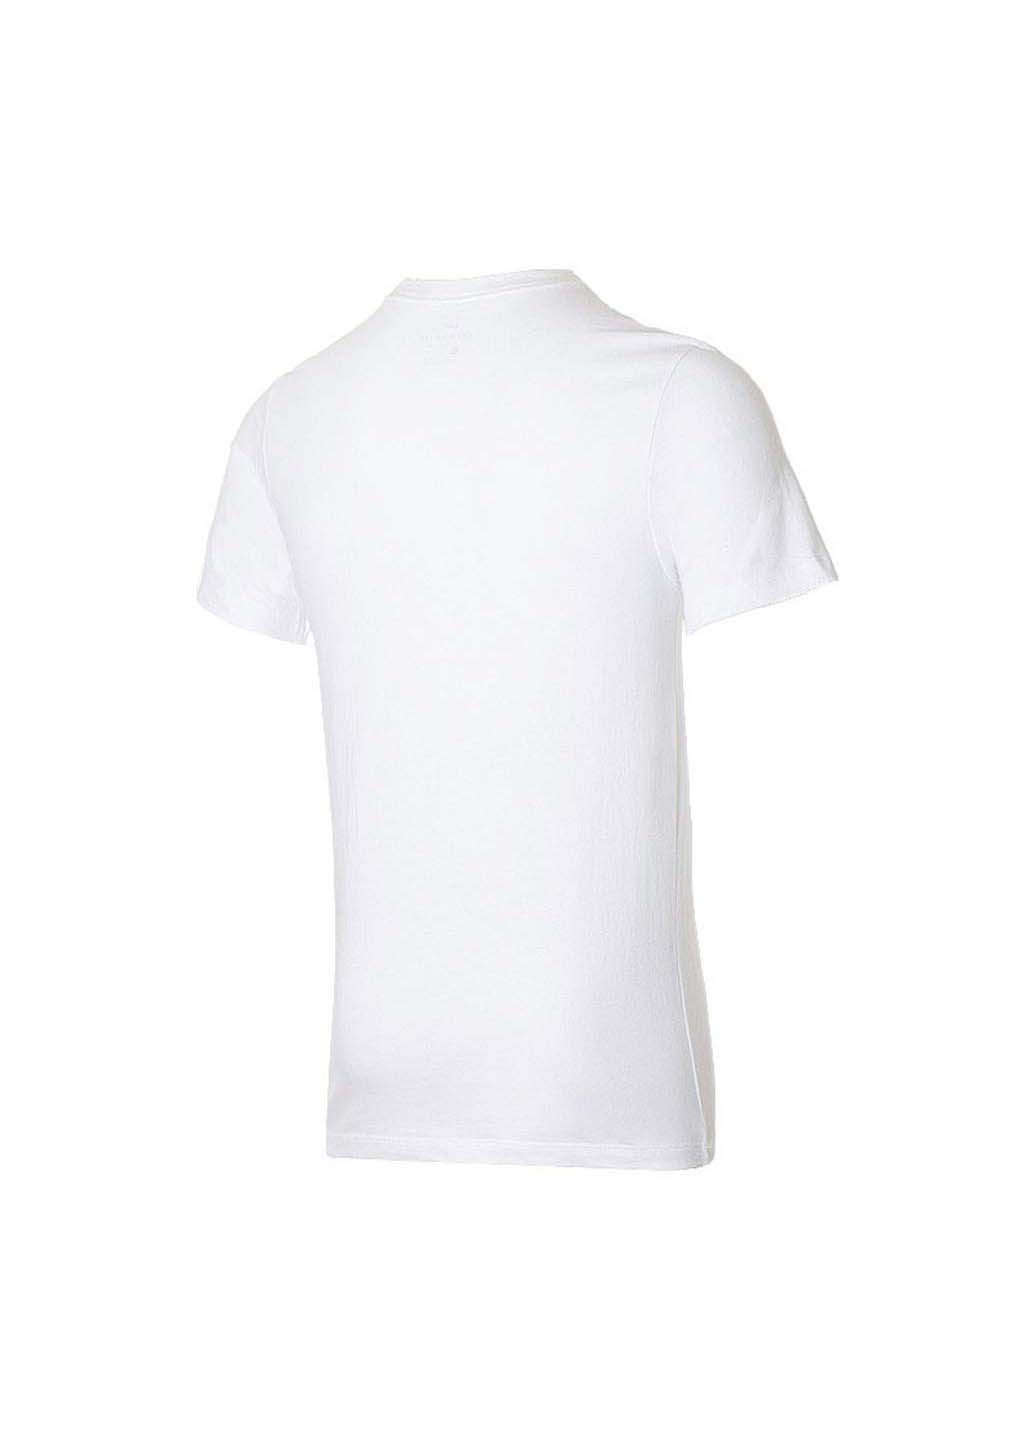 Белая футболка m nsw tee just do it swoosh Nike